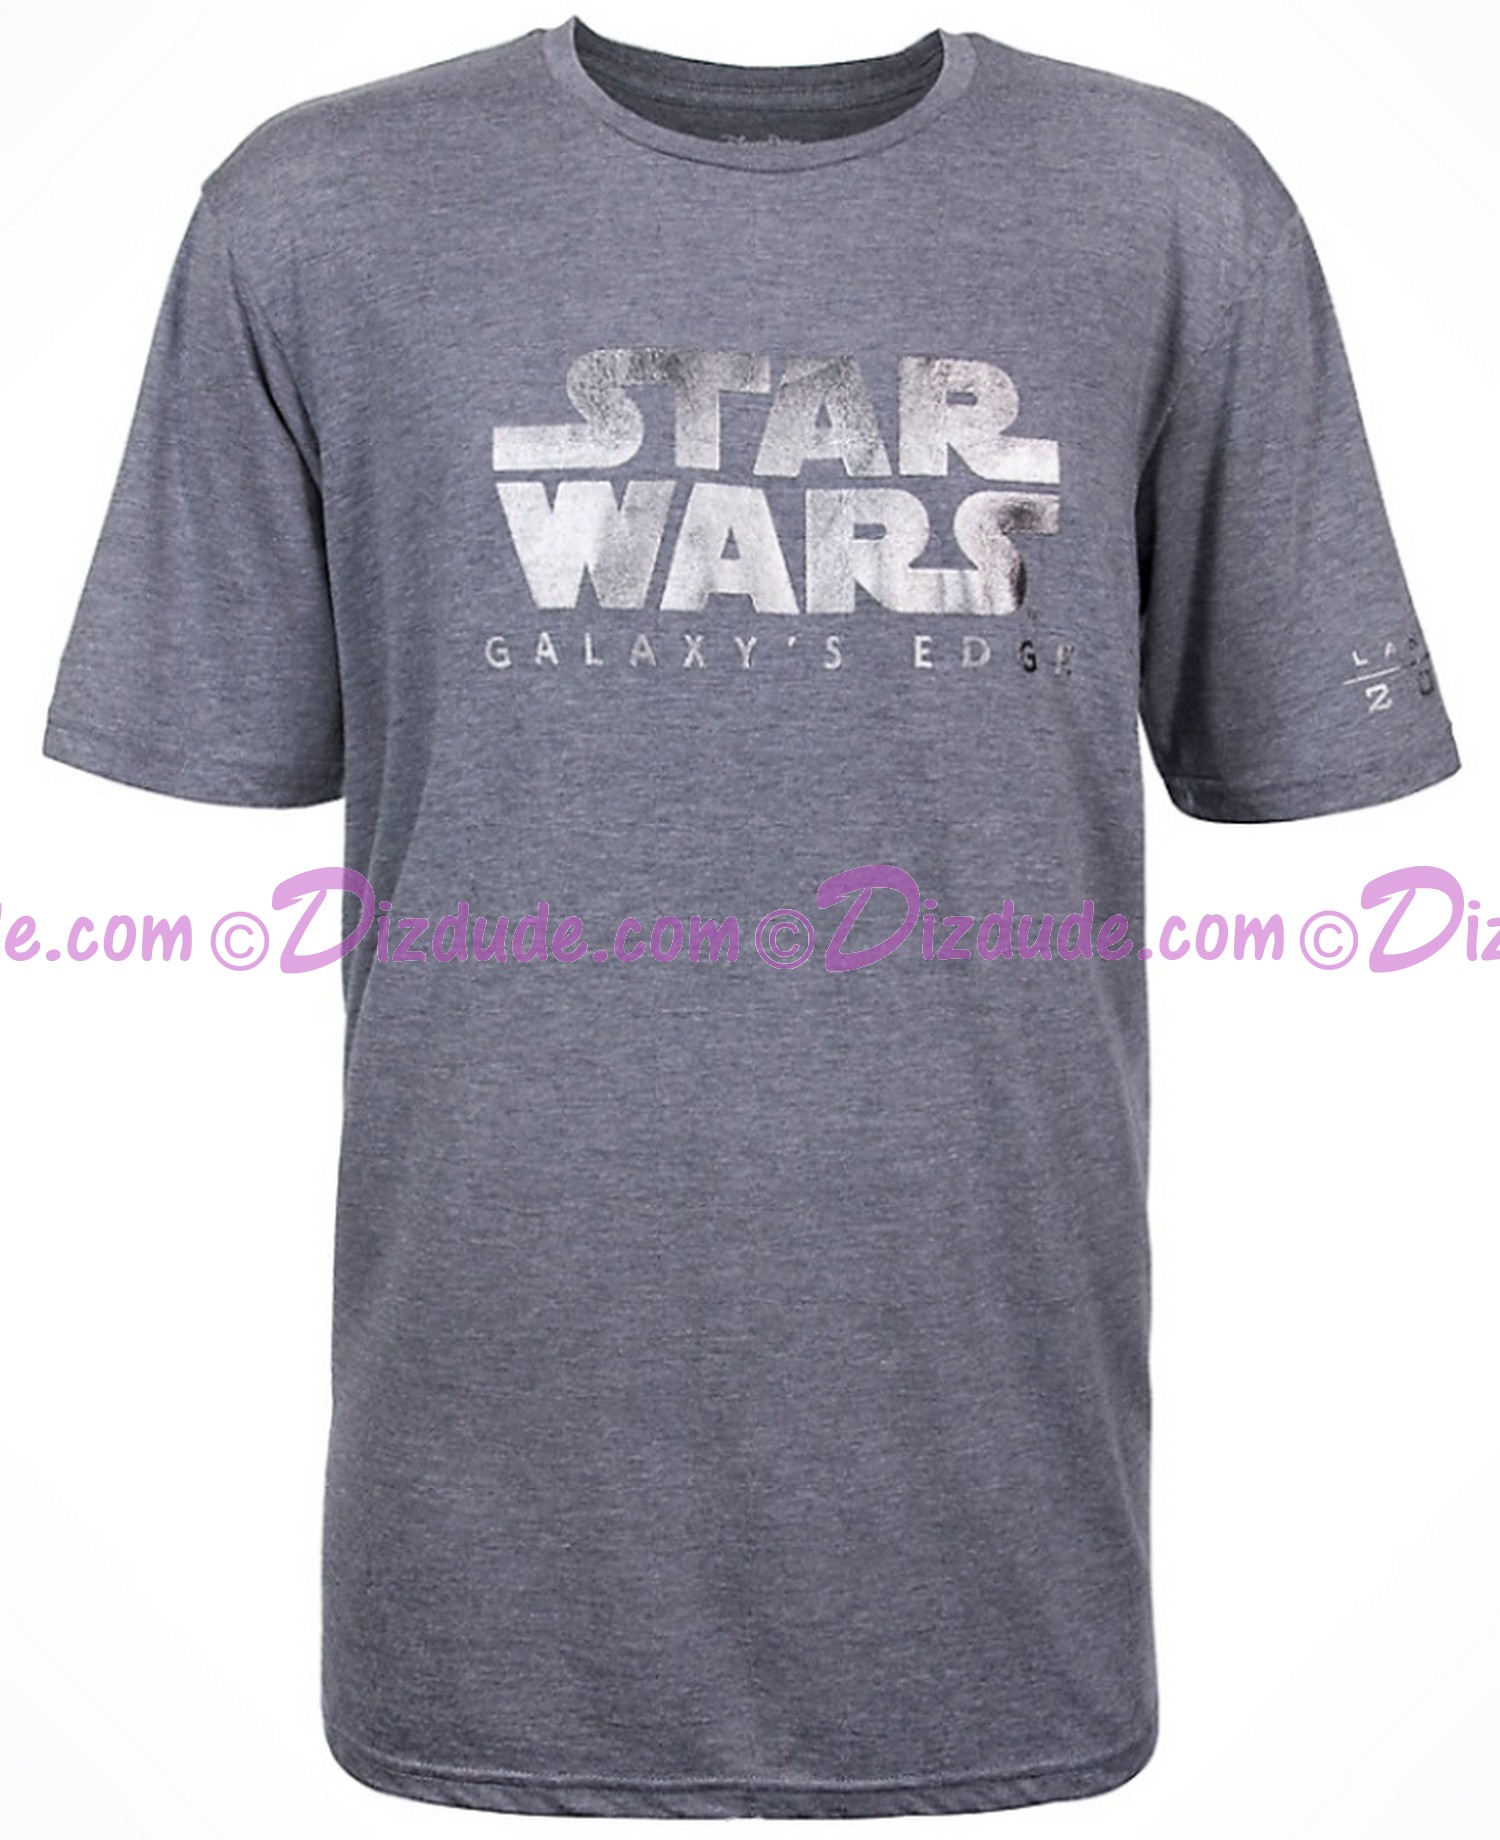 Disney Star Wars Galaxy's Edge Adult T-Shirt (Tshirt, T shirt or Tee) © Dizdude.com